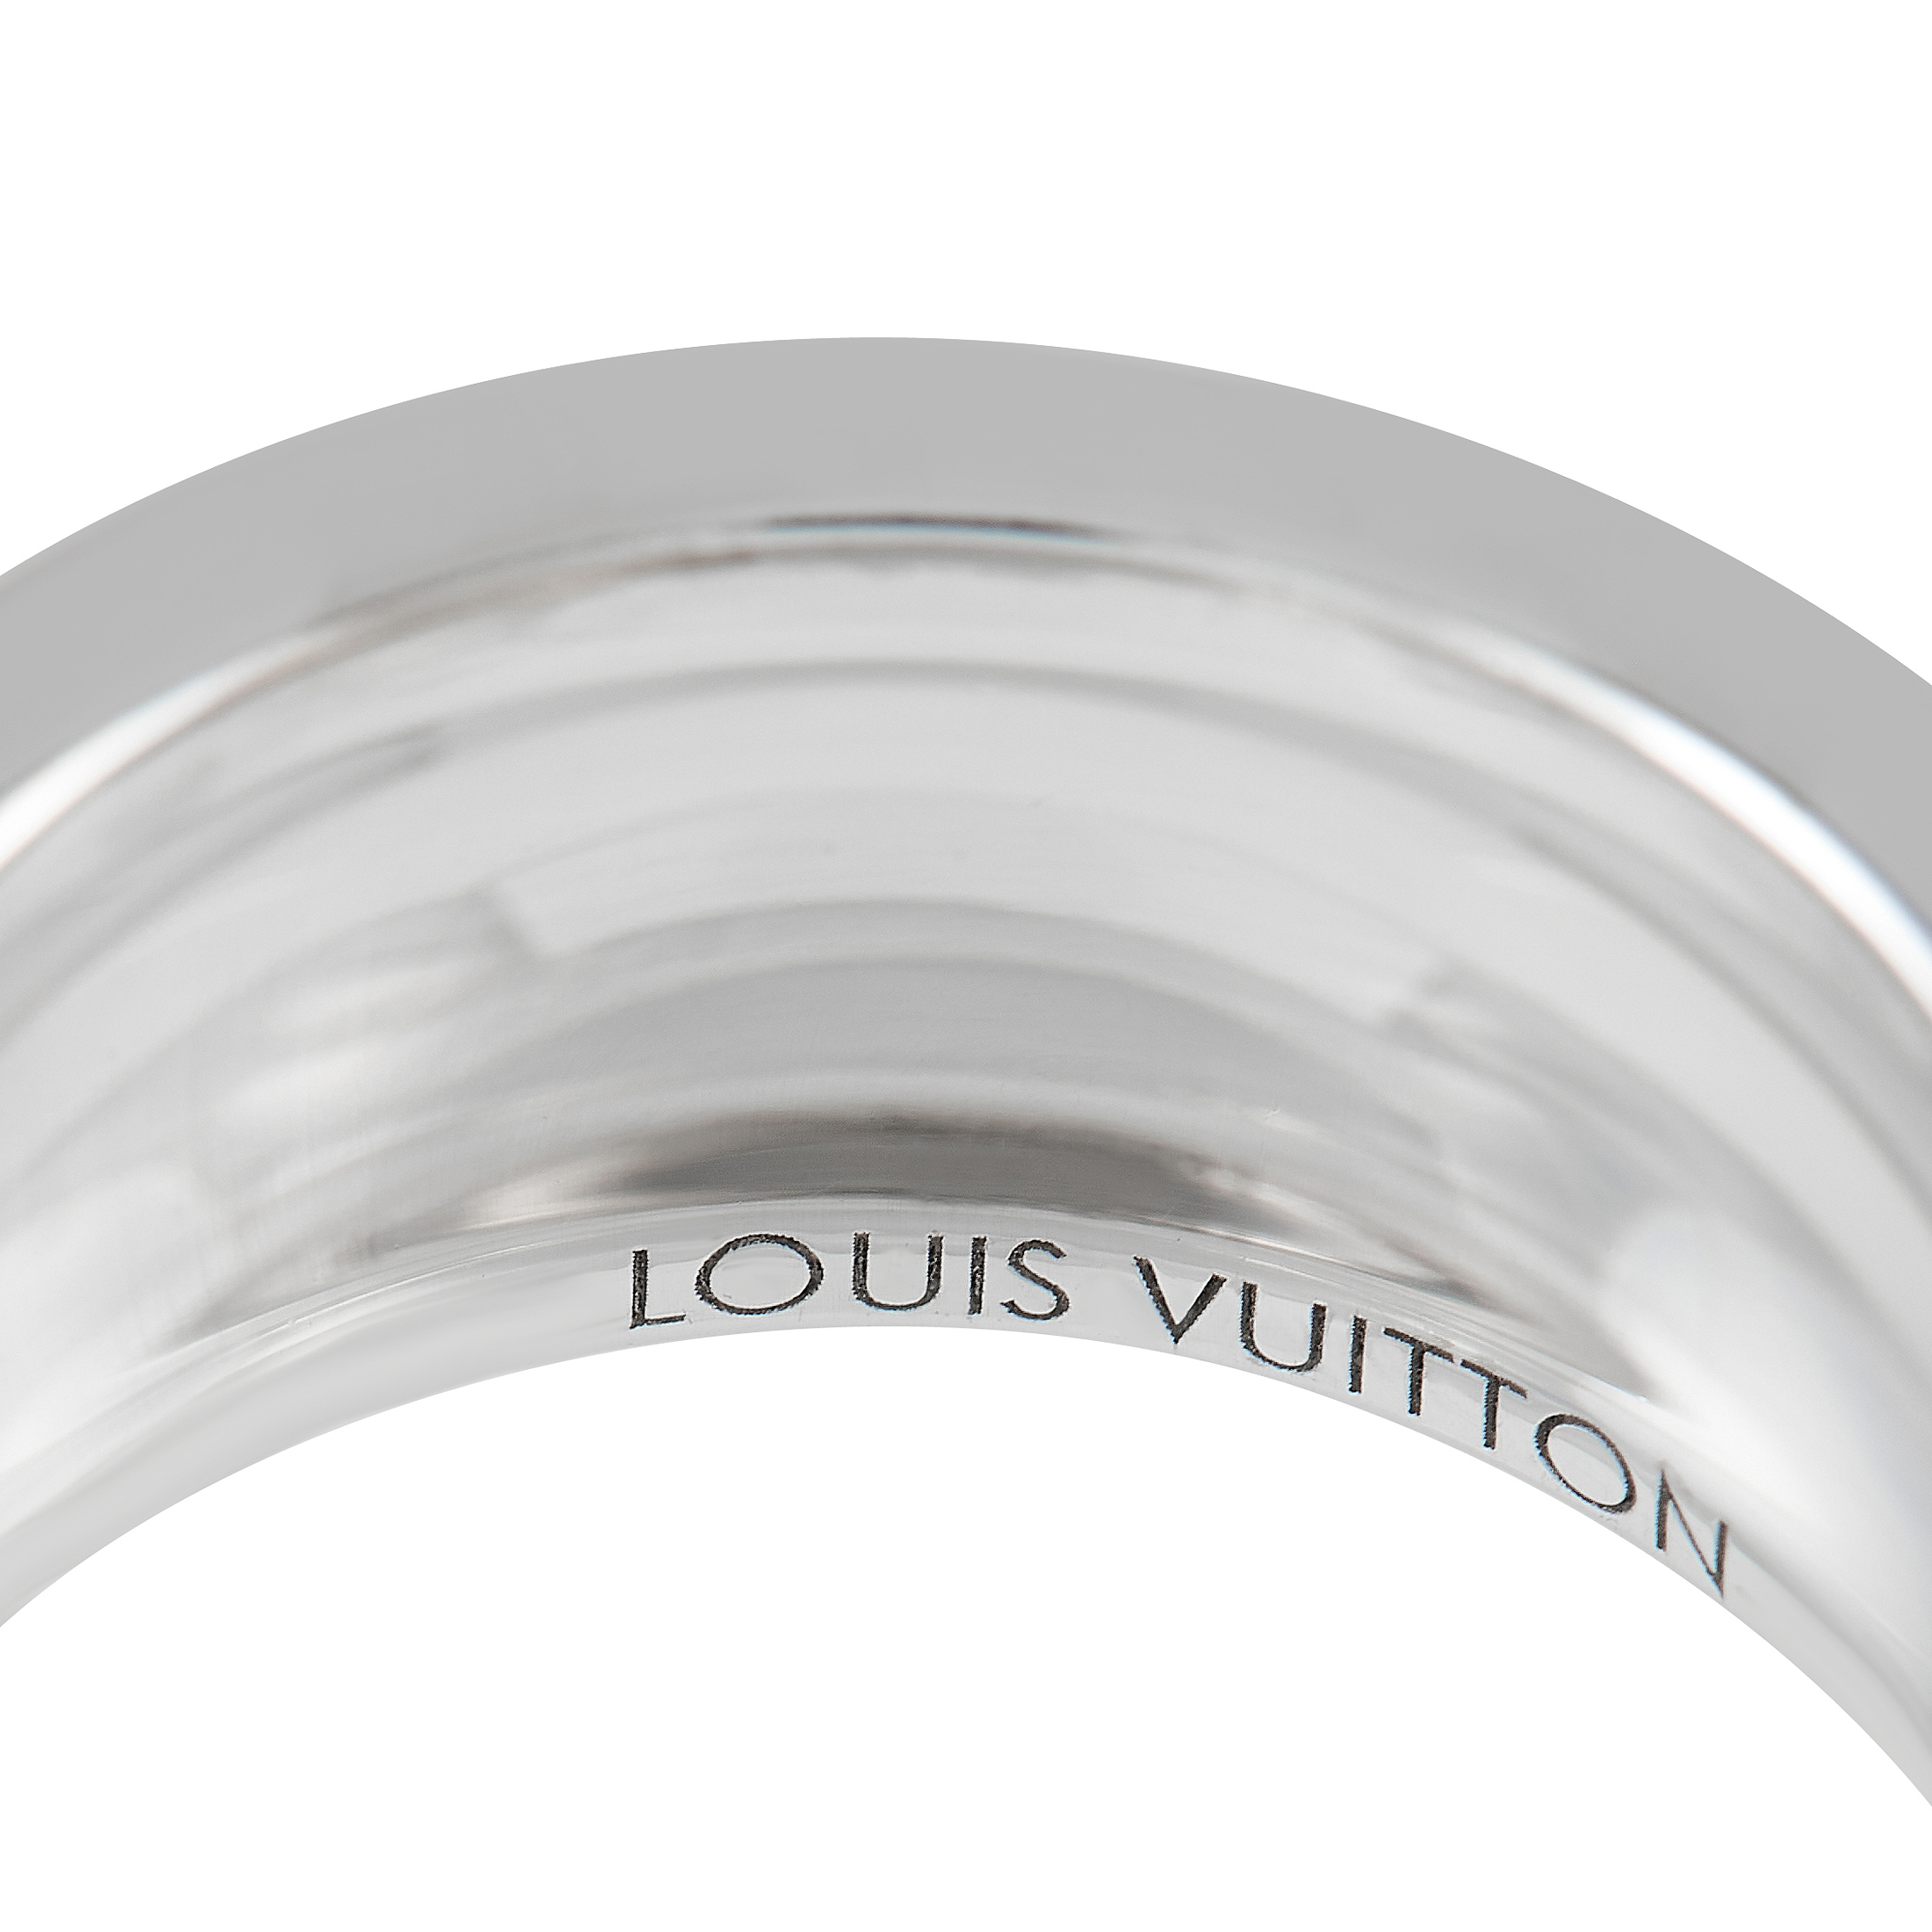 Louis Vuitton Large Empreinte Ring in 18k White Gold, myGemma